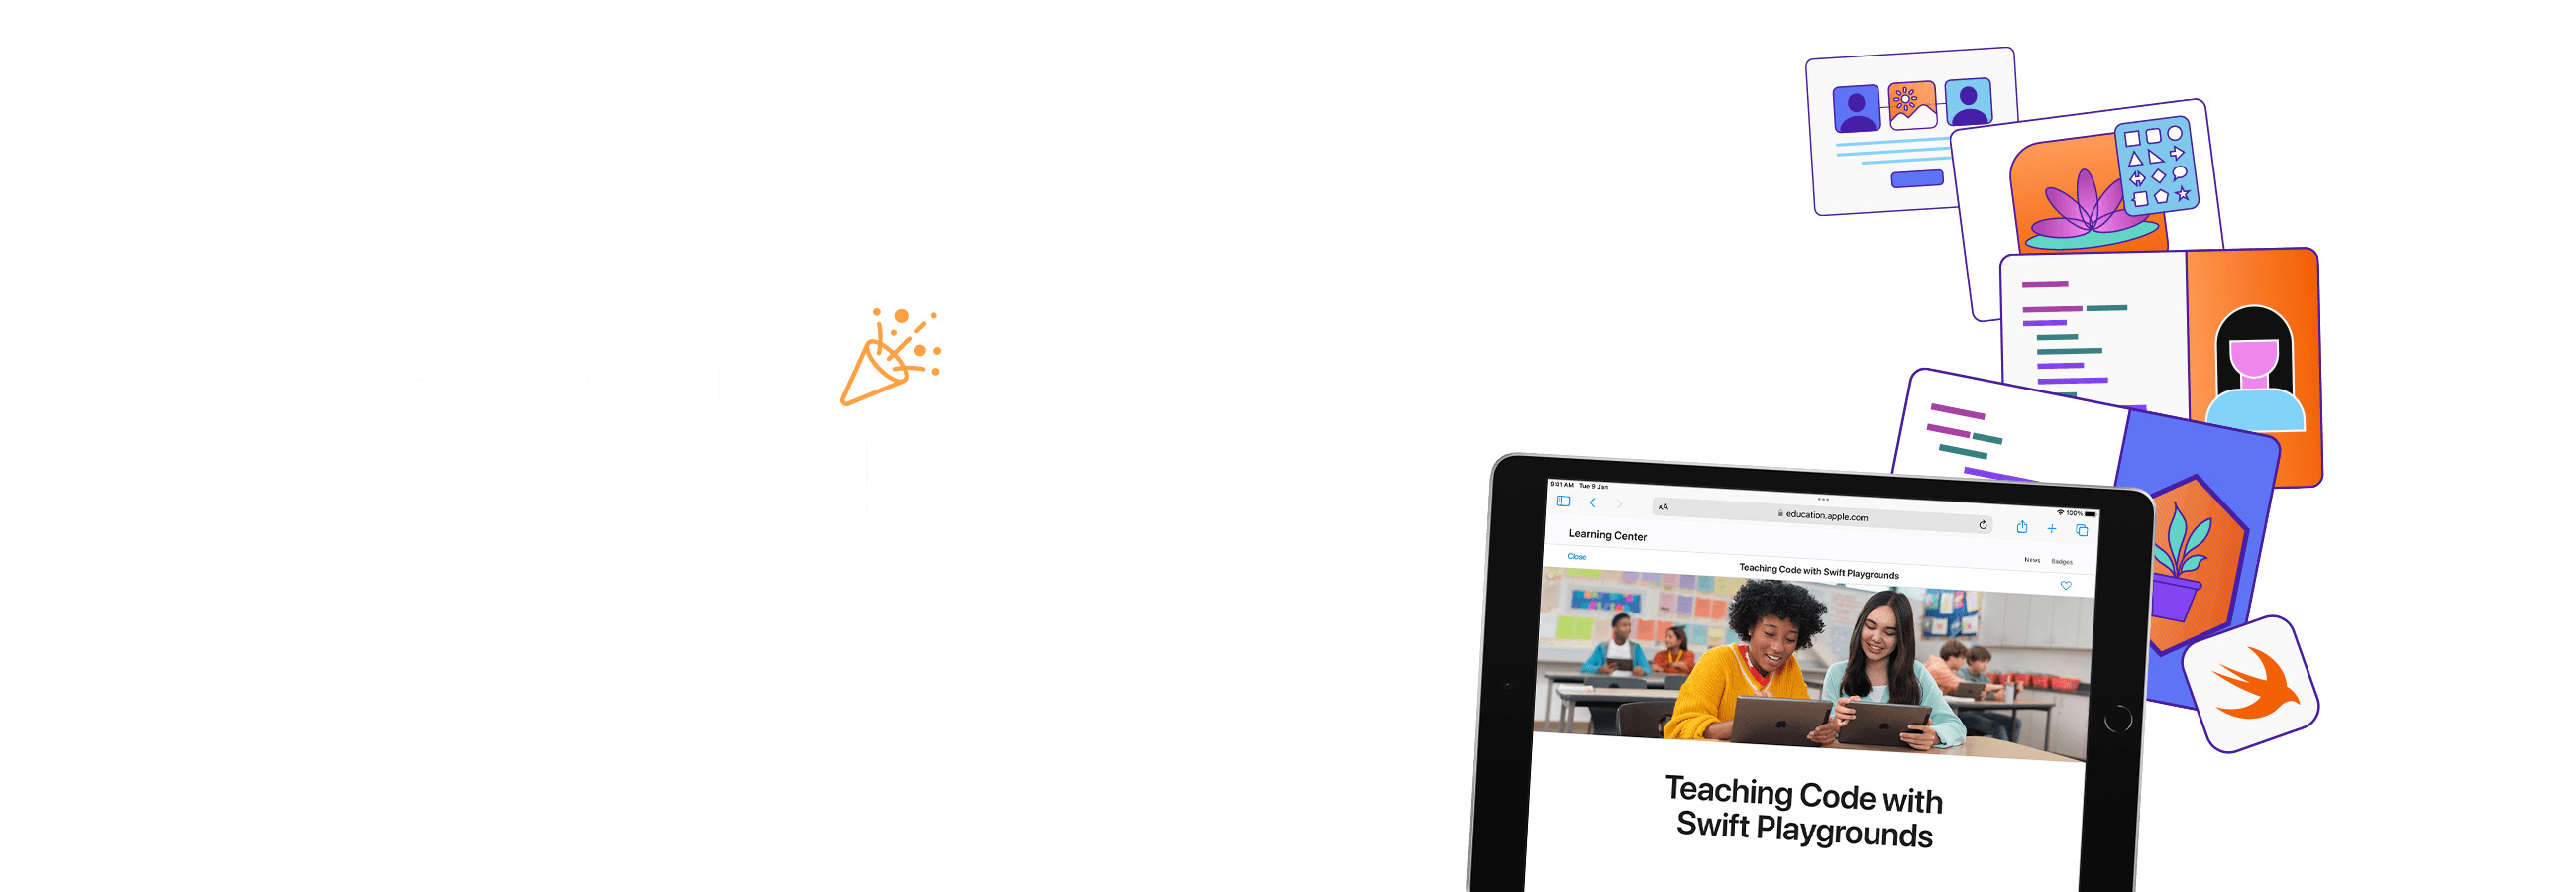 Code week with Apple